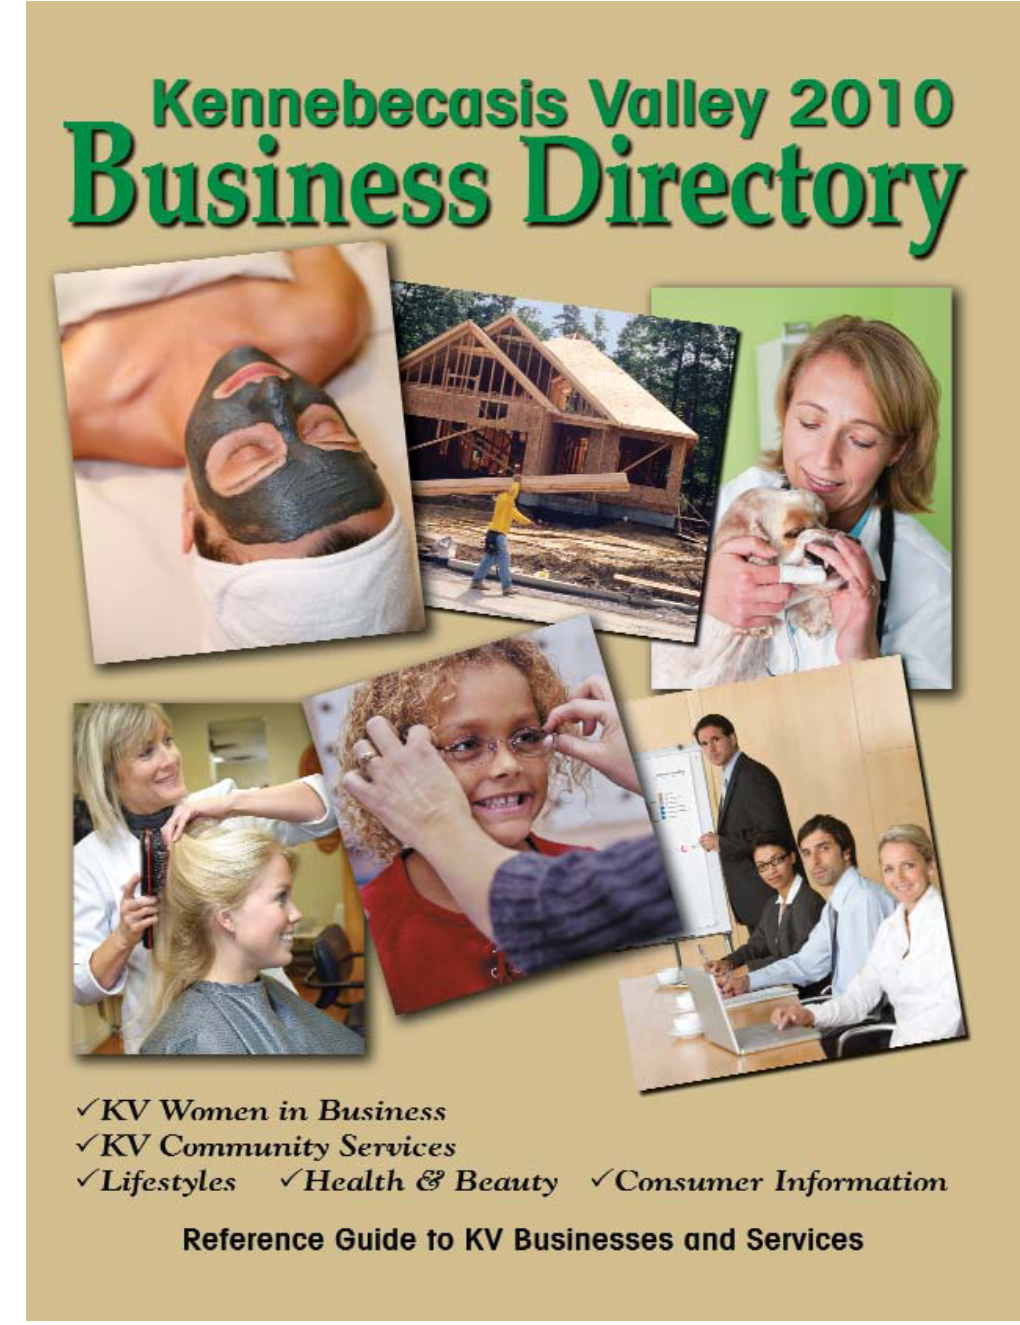 KV Business Directory 10:Magazine Layout 8.25 X 10.75.Qxd.Qxd